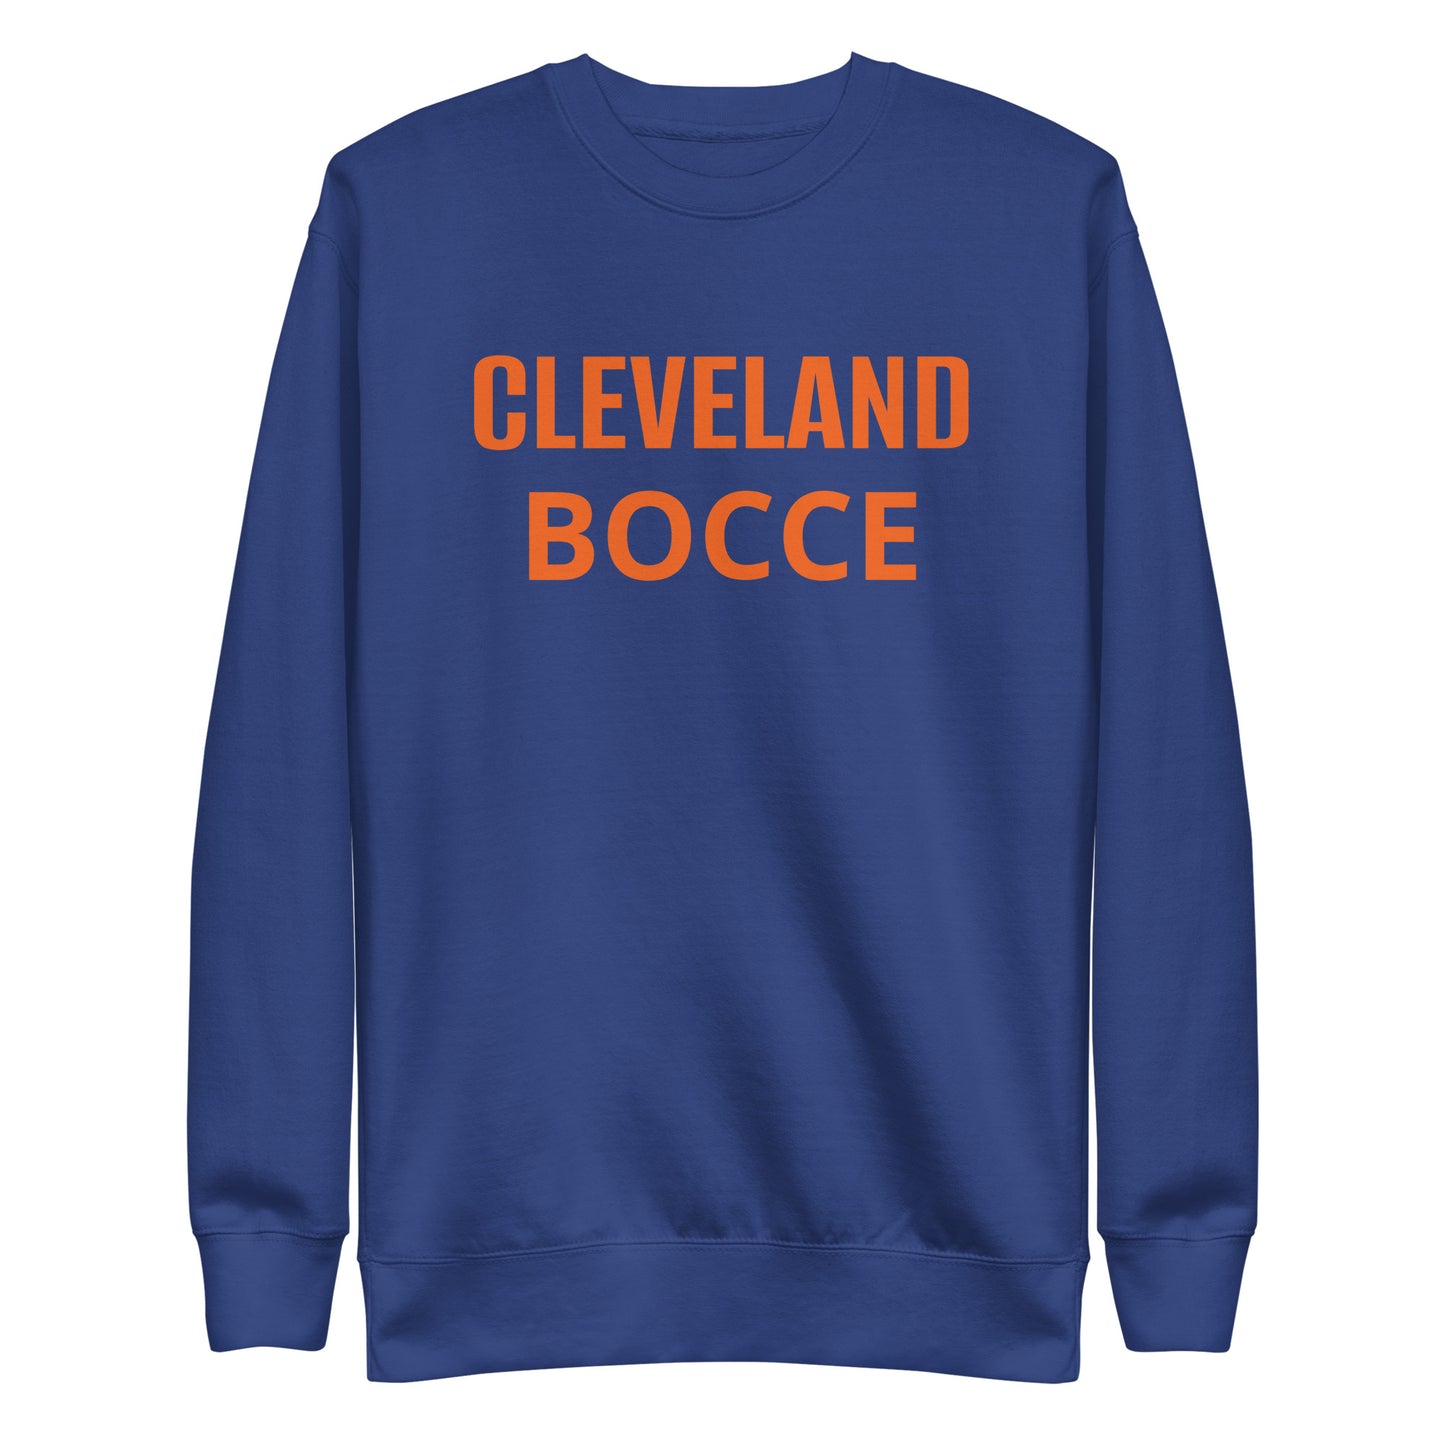 Cleveland Bocce Long Sleece